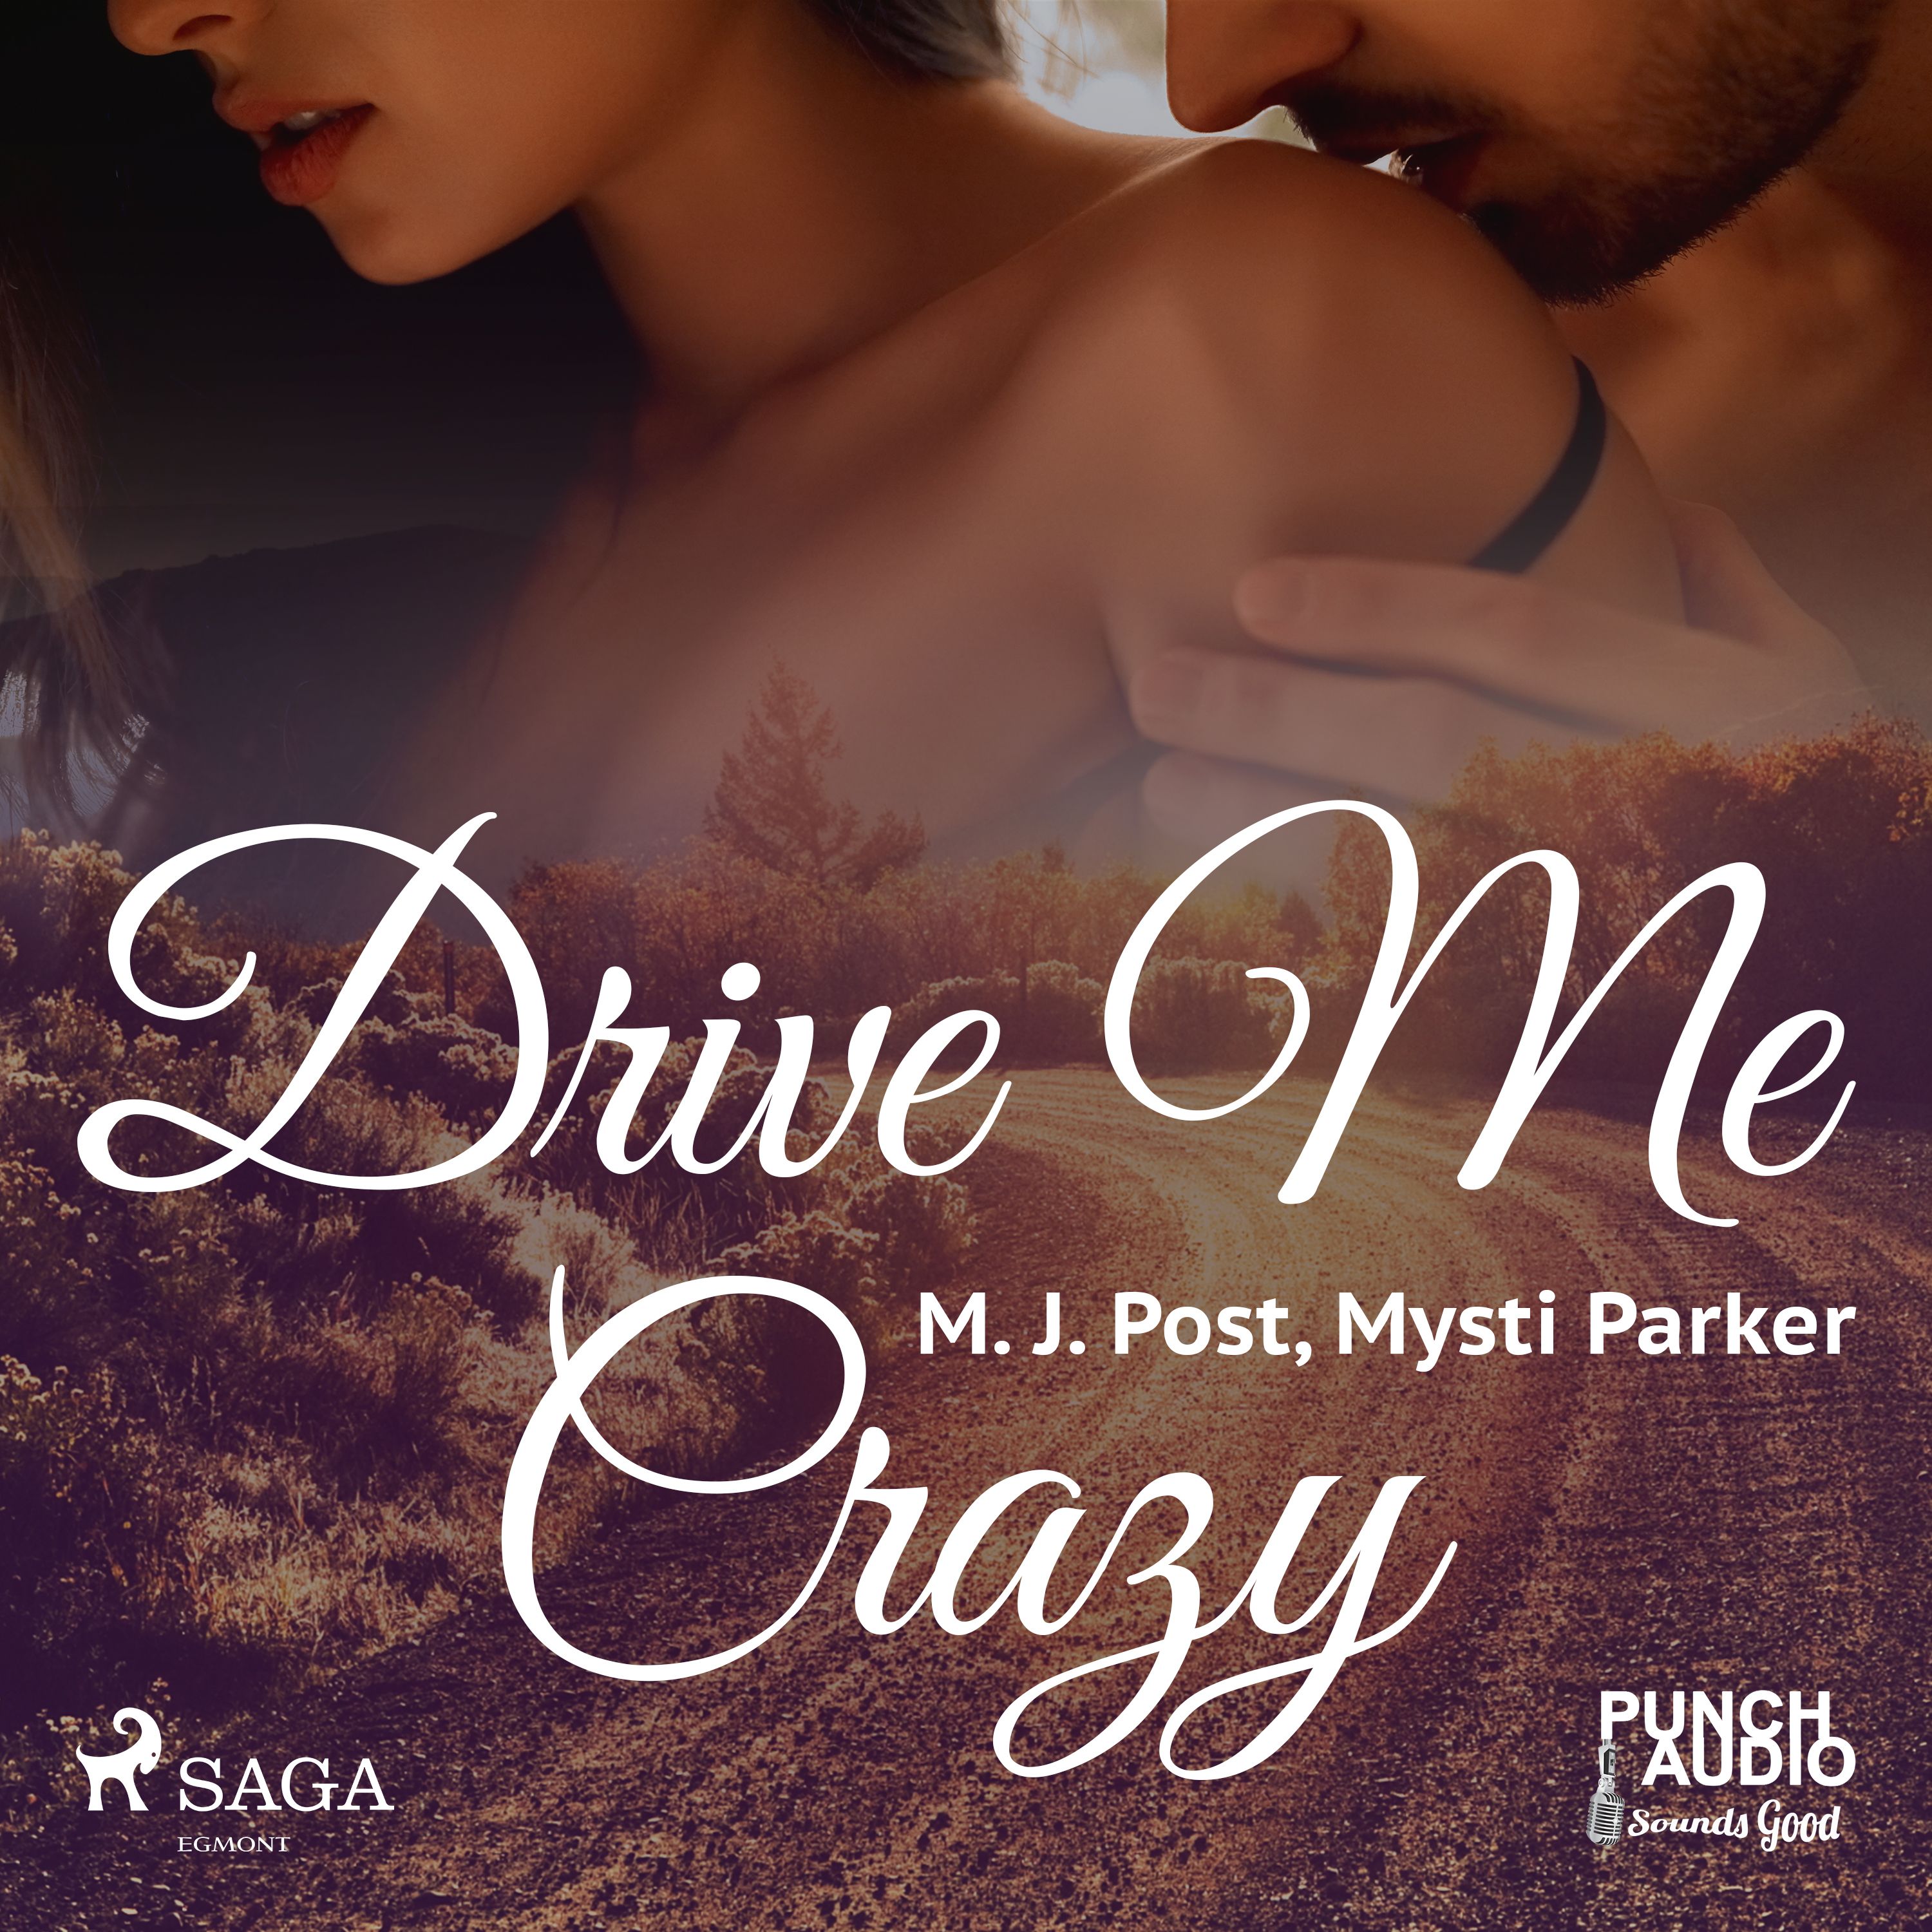 Drive Me Crazy, ljudbok av Mysti Parker, M. J. Post